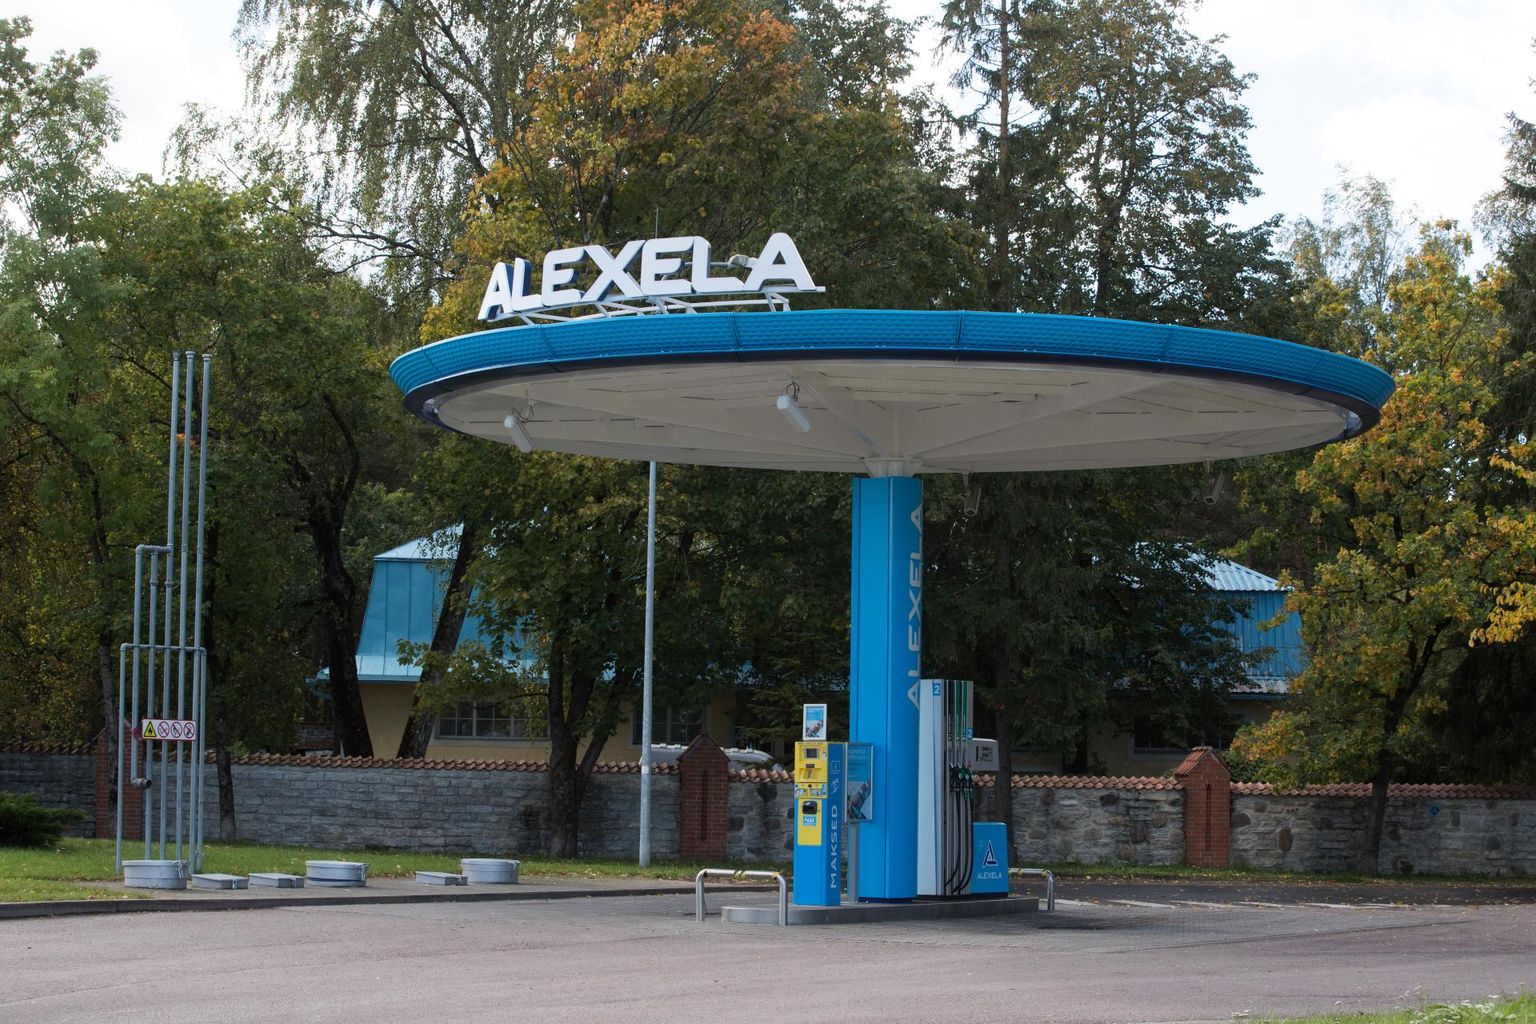 Alexela automaattankla Tallinnas.